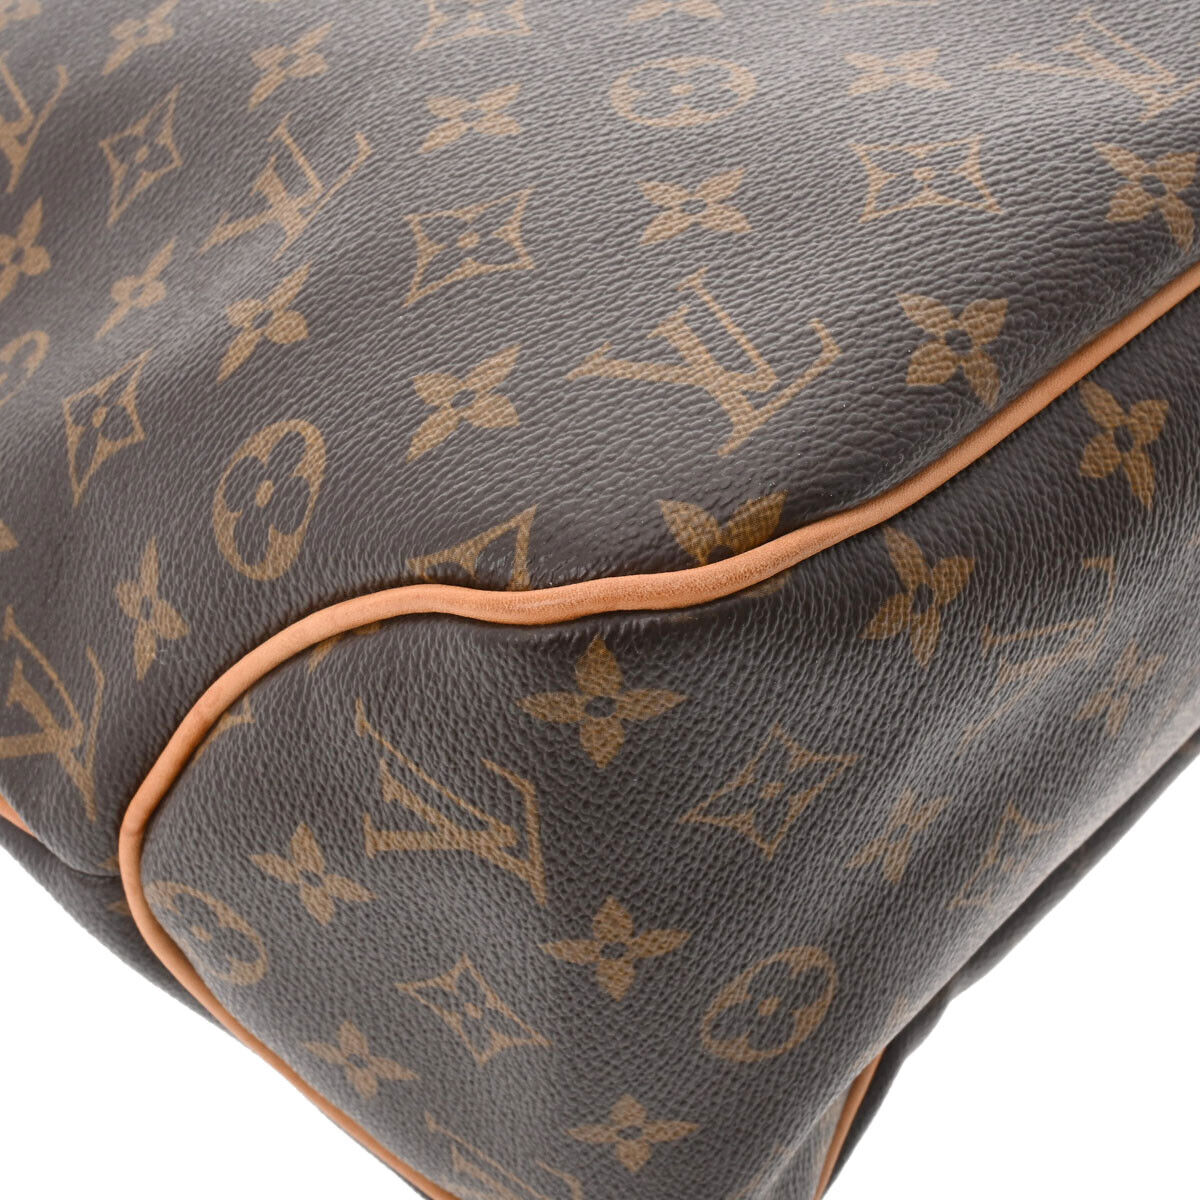 Louis Vuitton Brown Monogram Canvas Delightful MM Shoulder Bag